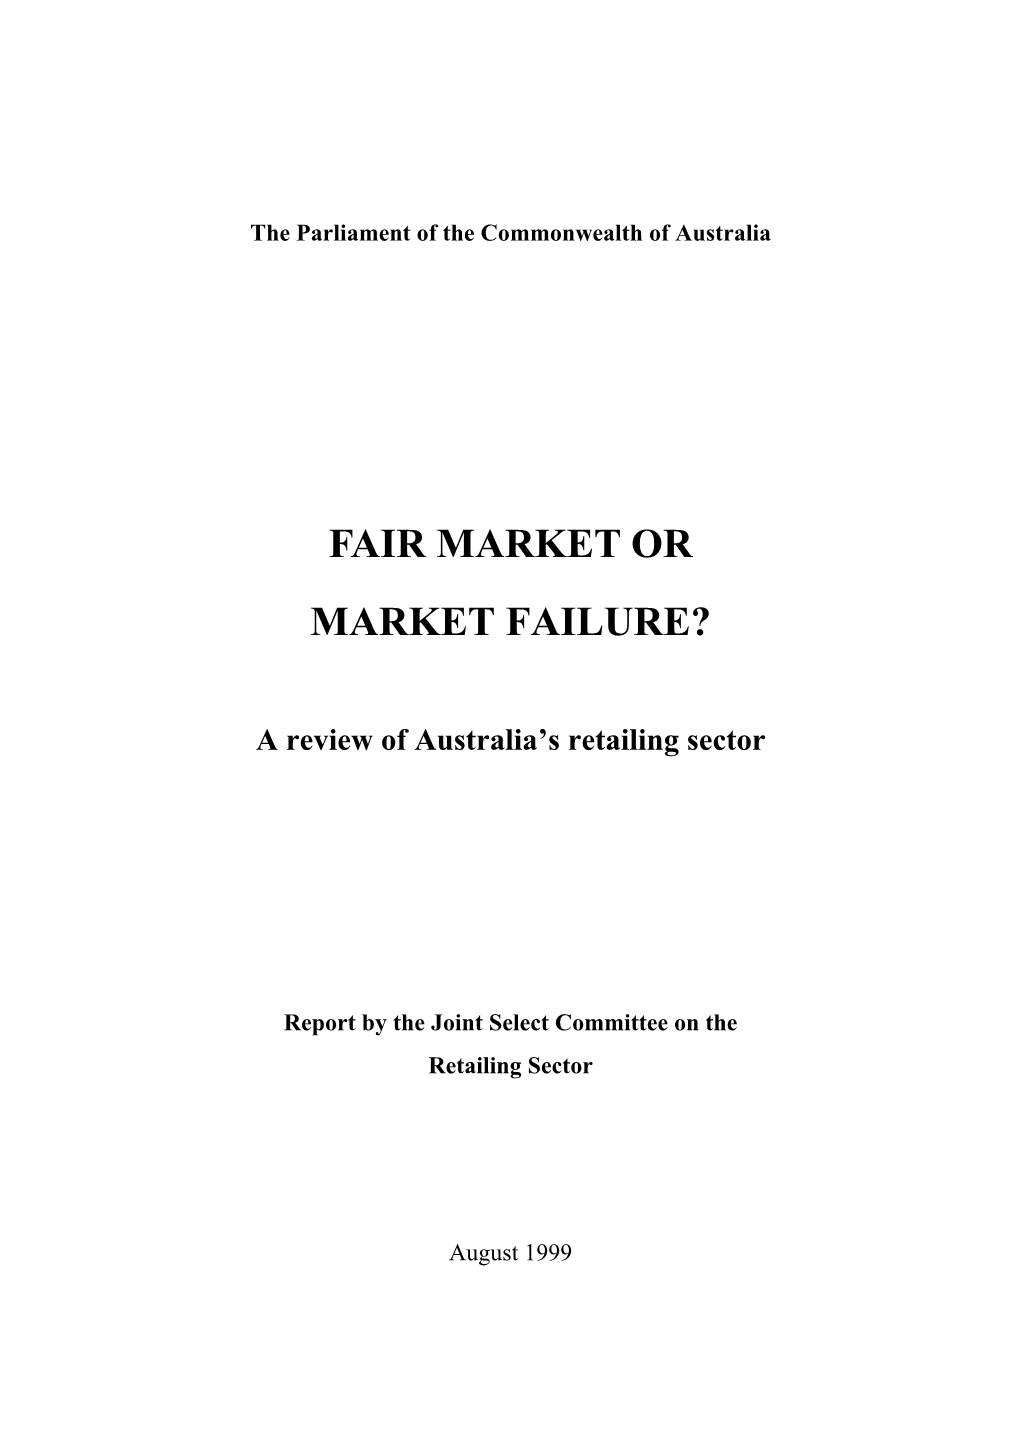 Report: Fair Market Or Market Failure?